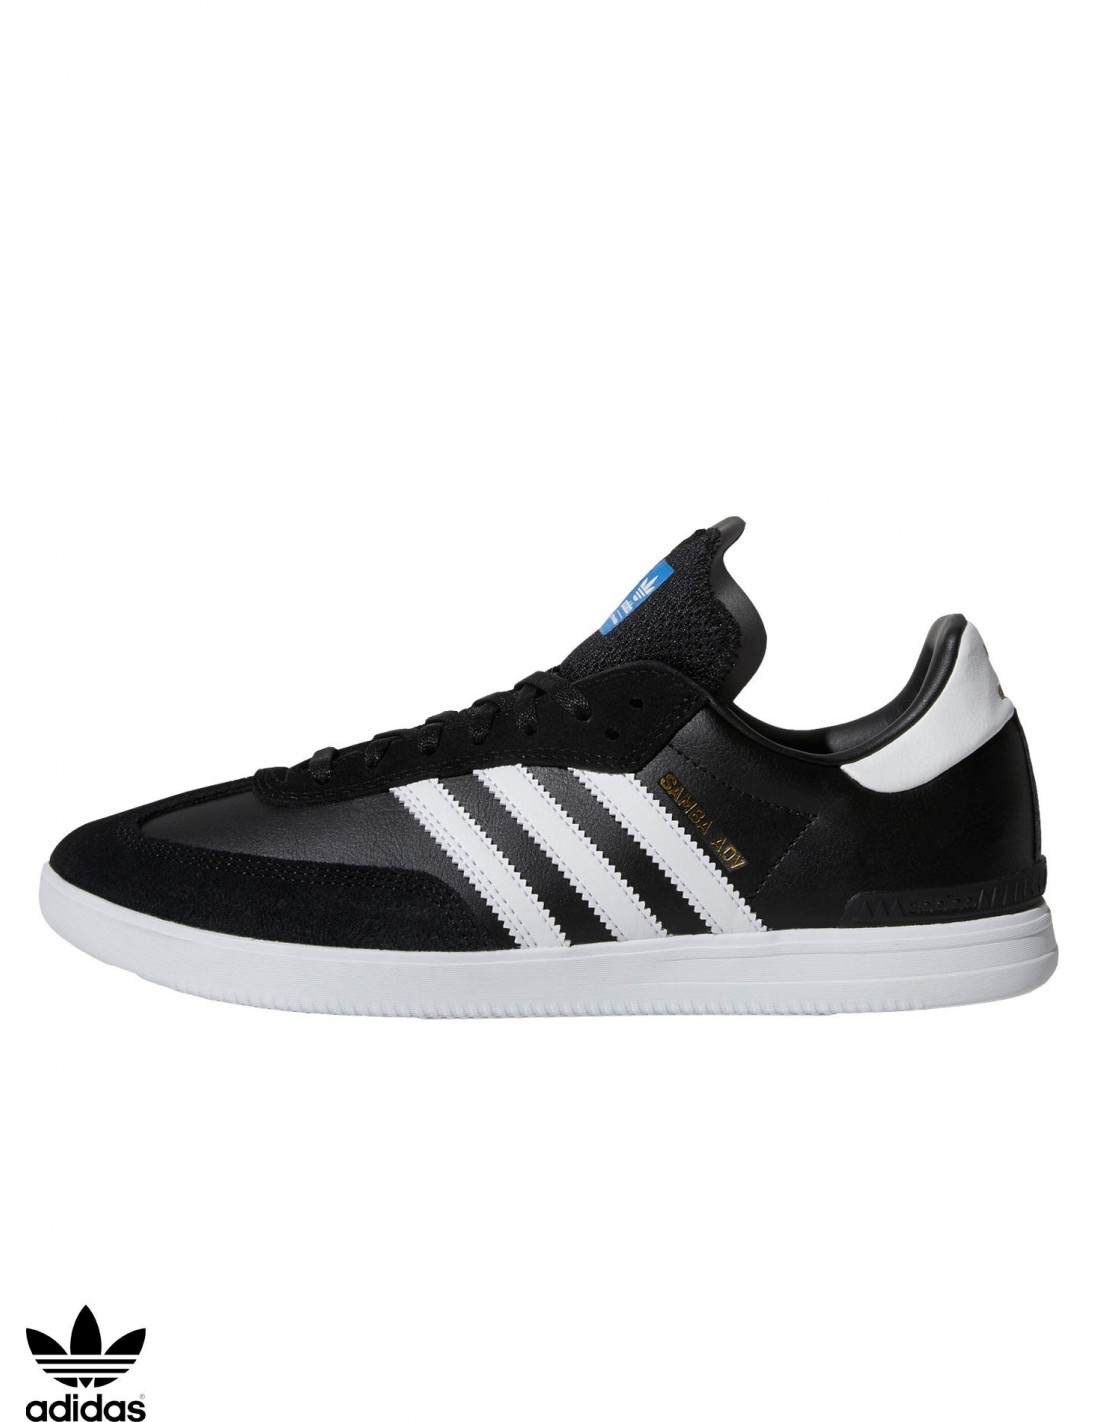 Adidas Samba ADV Black / White Skate Shoes